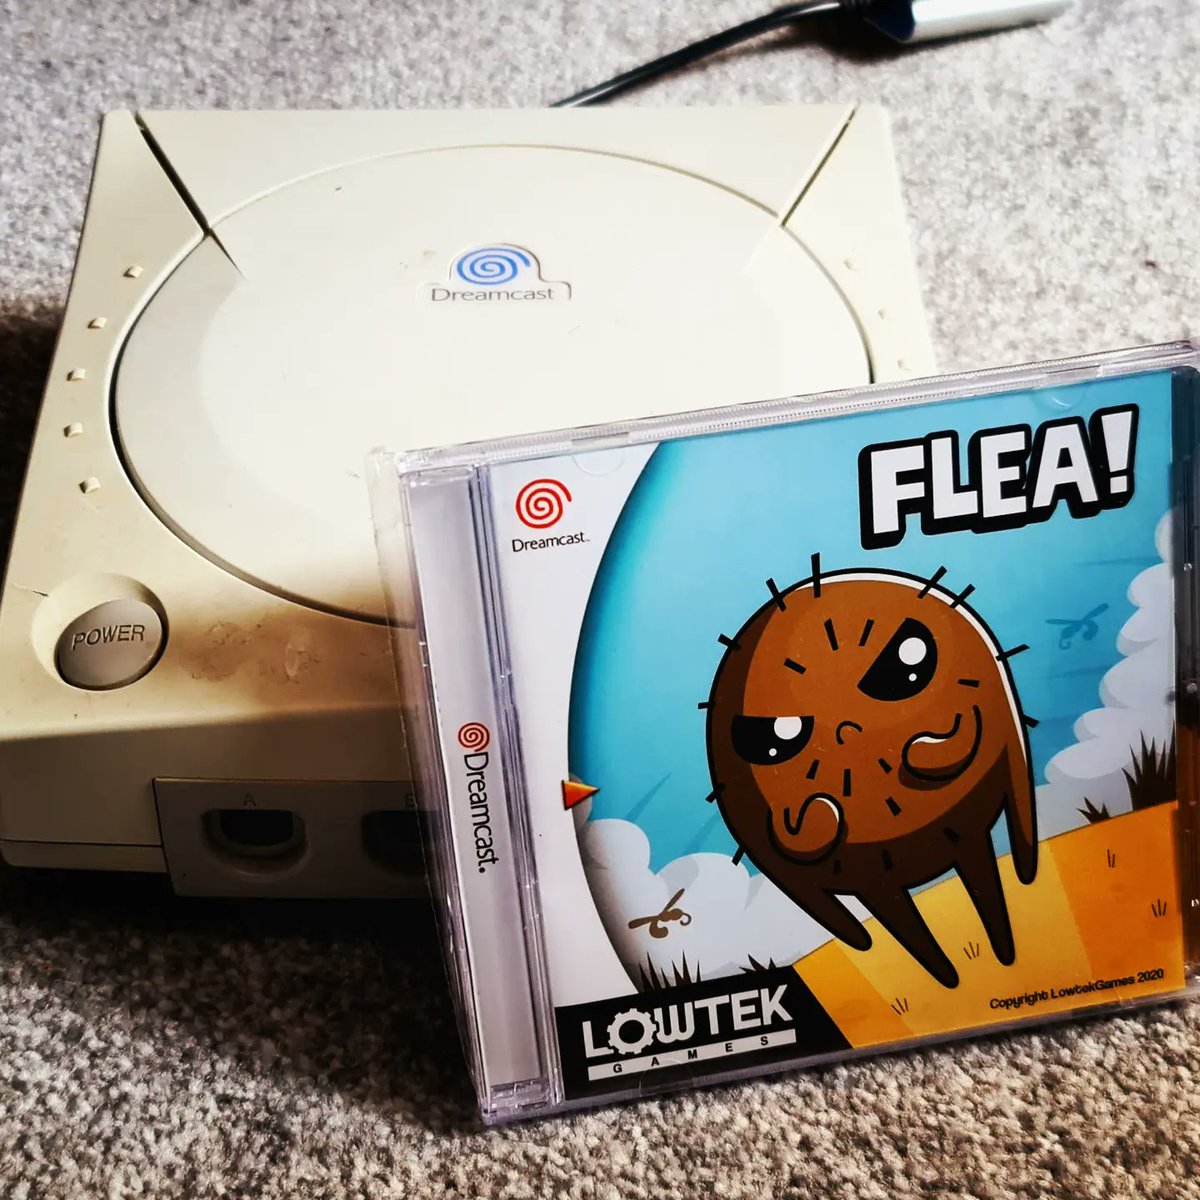 After seeing it on @megavisionsmag 24-hour #Dreamcast marathon last weekend, I just had to pick up the wonderful little game that is Flea! 😘👌
.
#RetroGaming #SEGA @LowtekGames #IndieGame #indiedev #SEGAForever